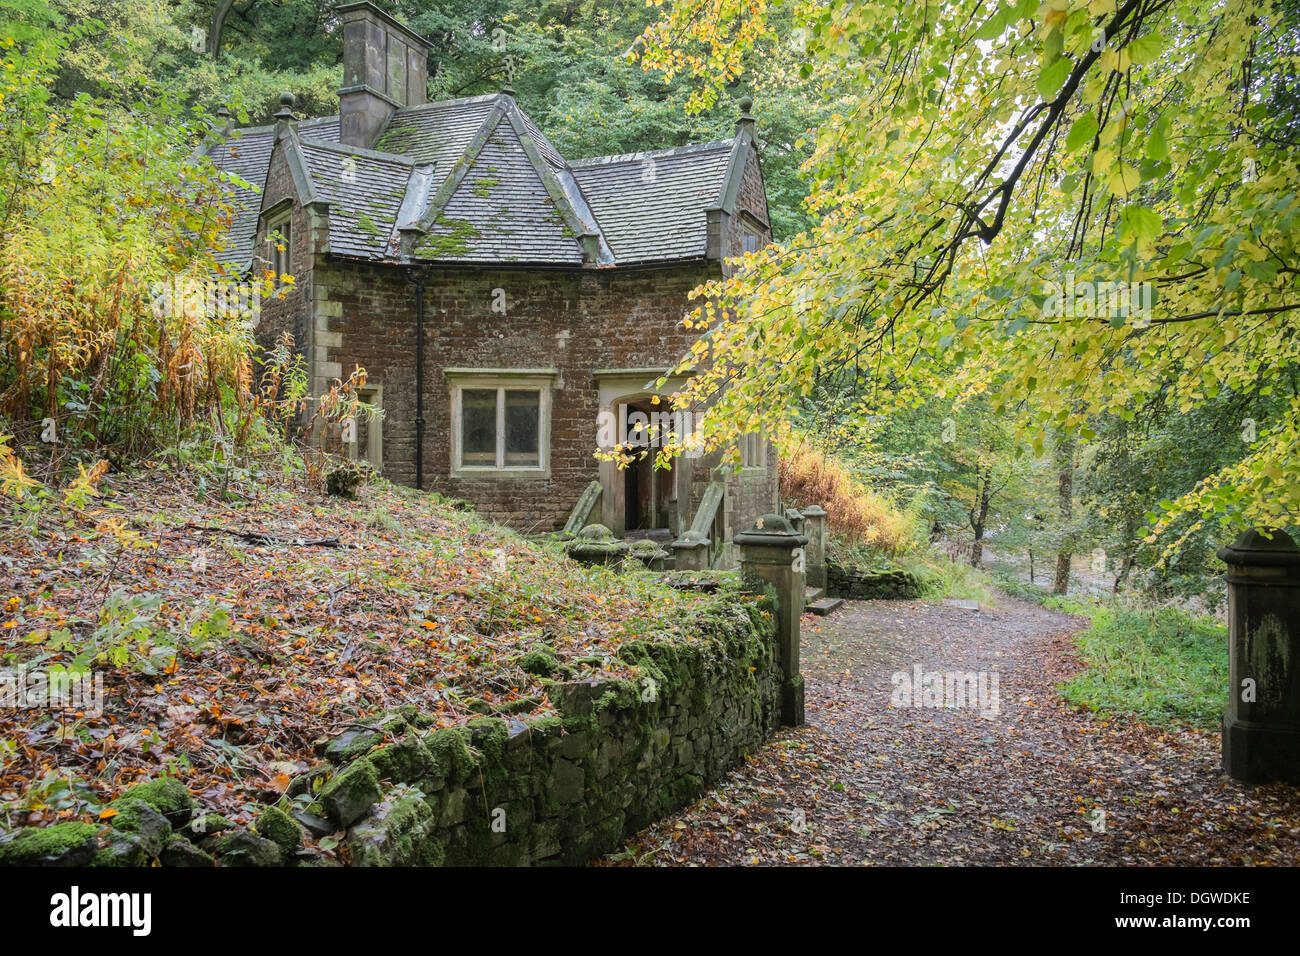 Character building surrounded with autumn coloured foliage, Ilam Park, Derbyshire, England, United Kingdom Stock Photo